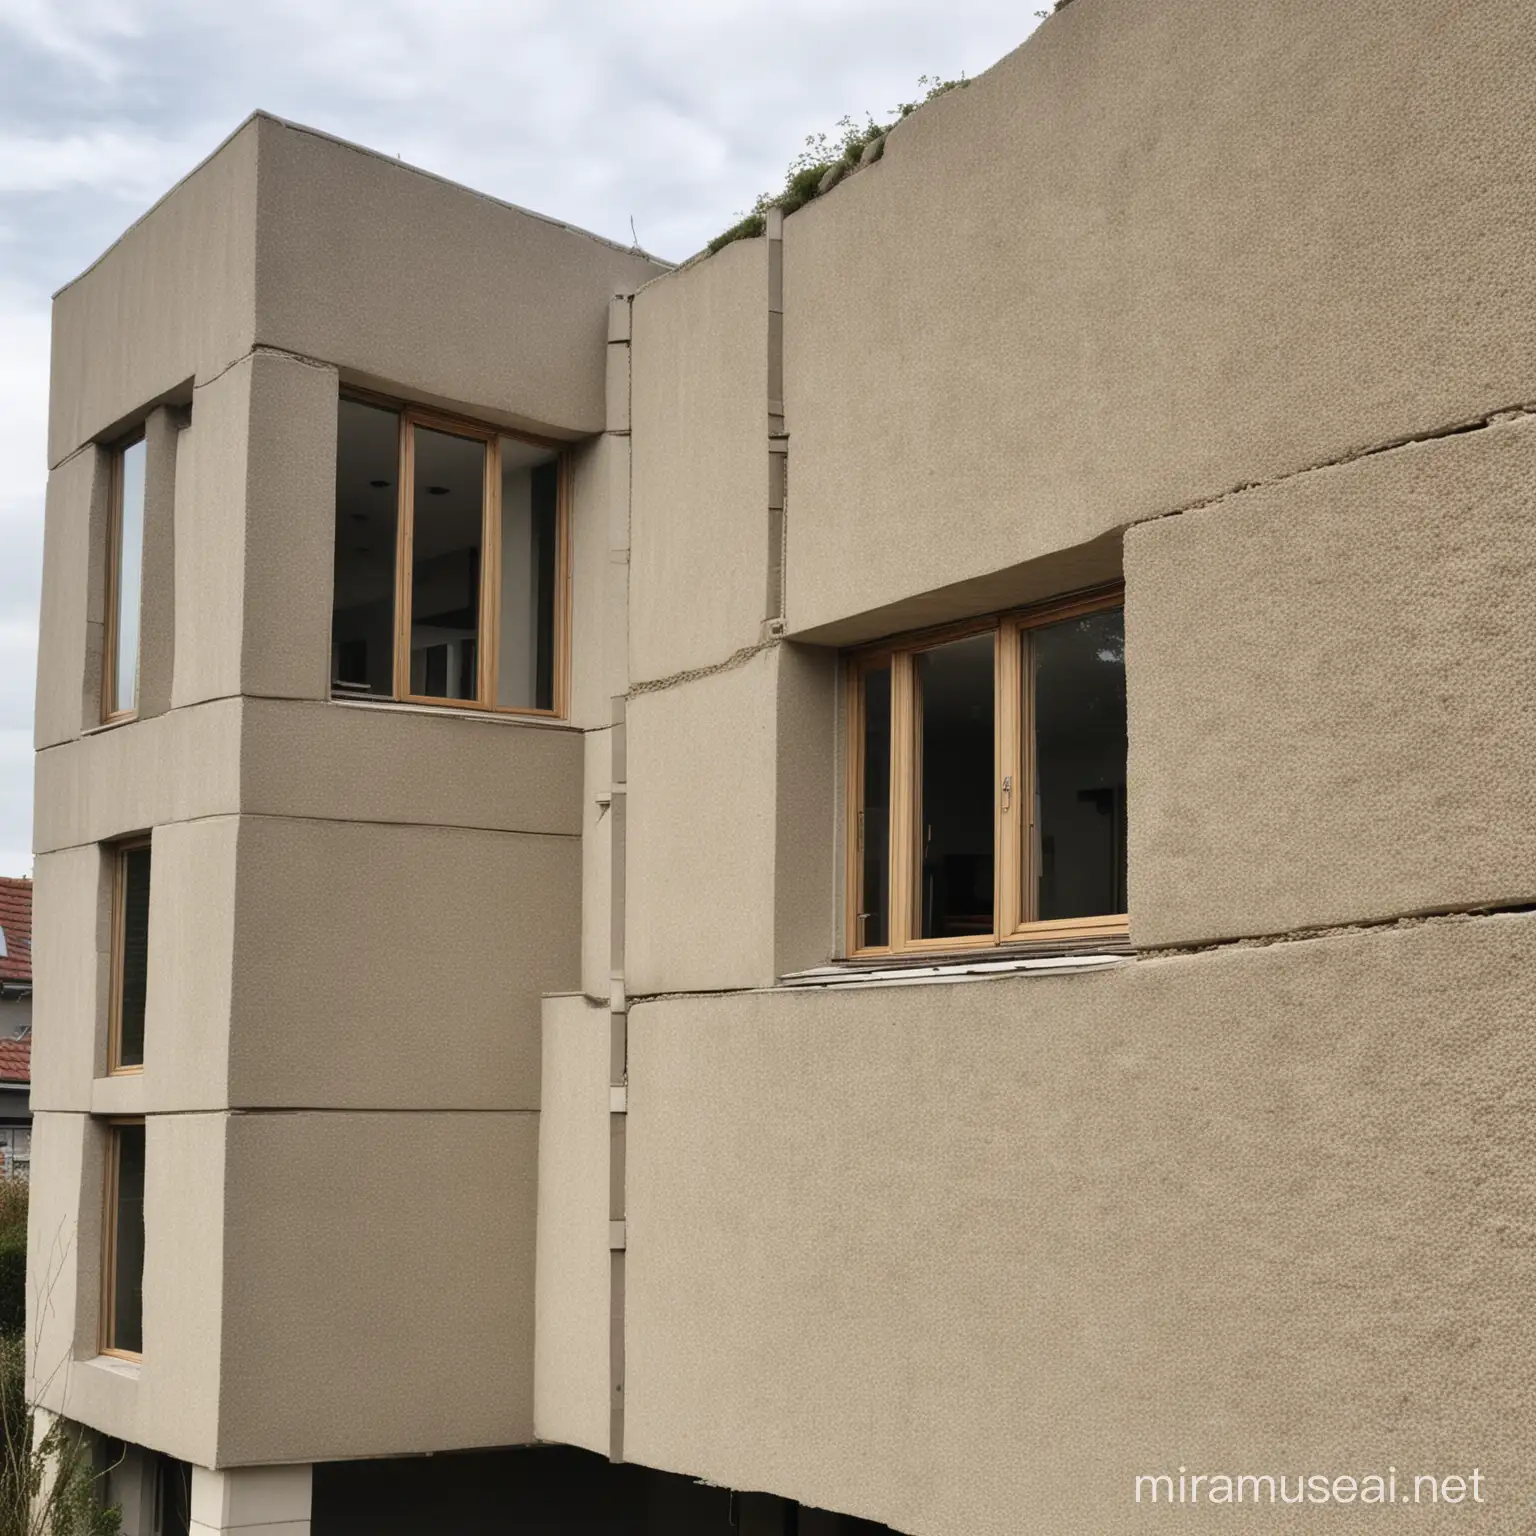 Brutalist style houses made of beige grey hempcrete panels